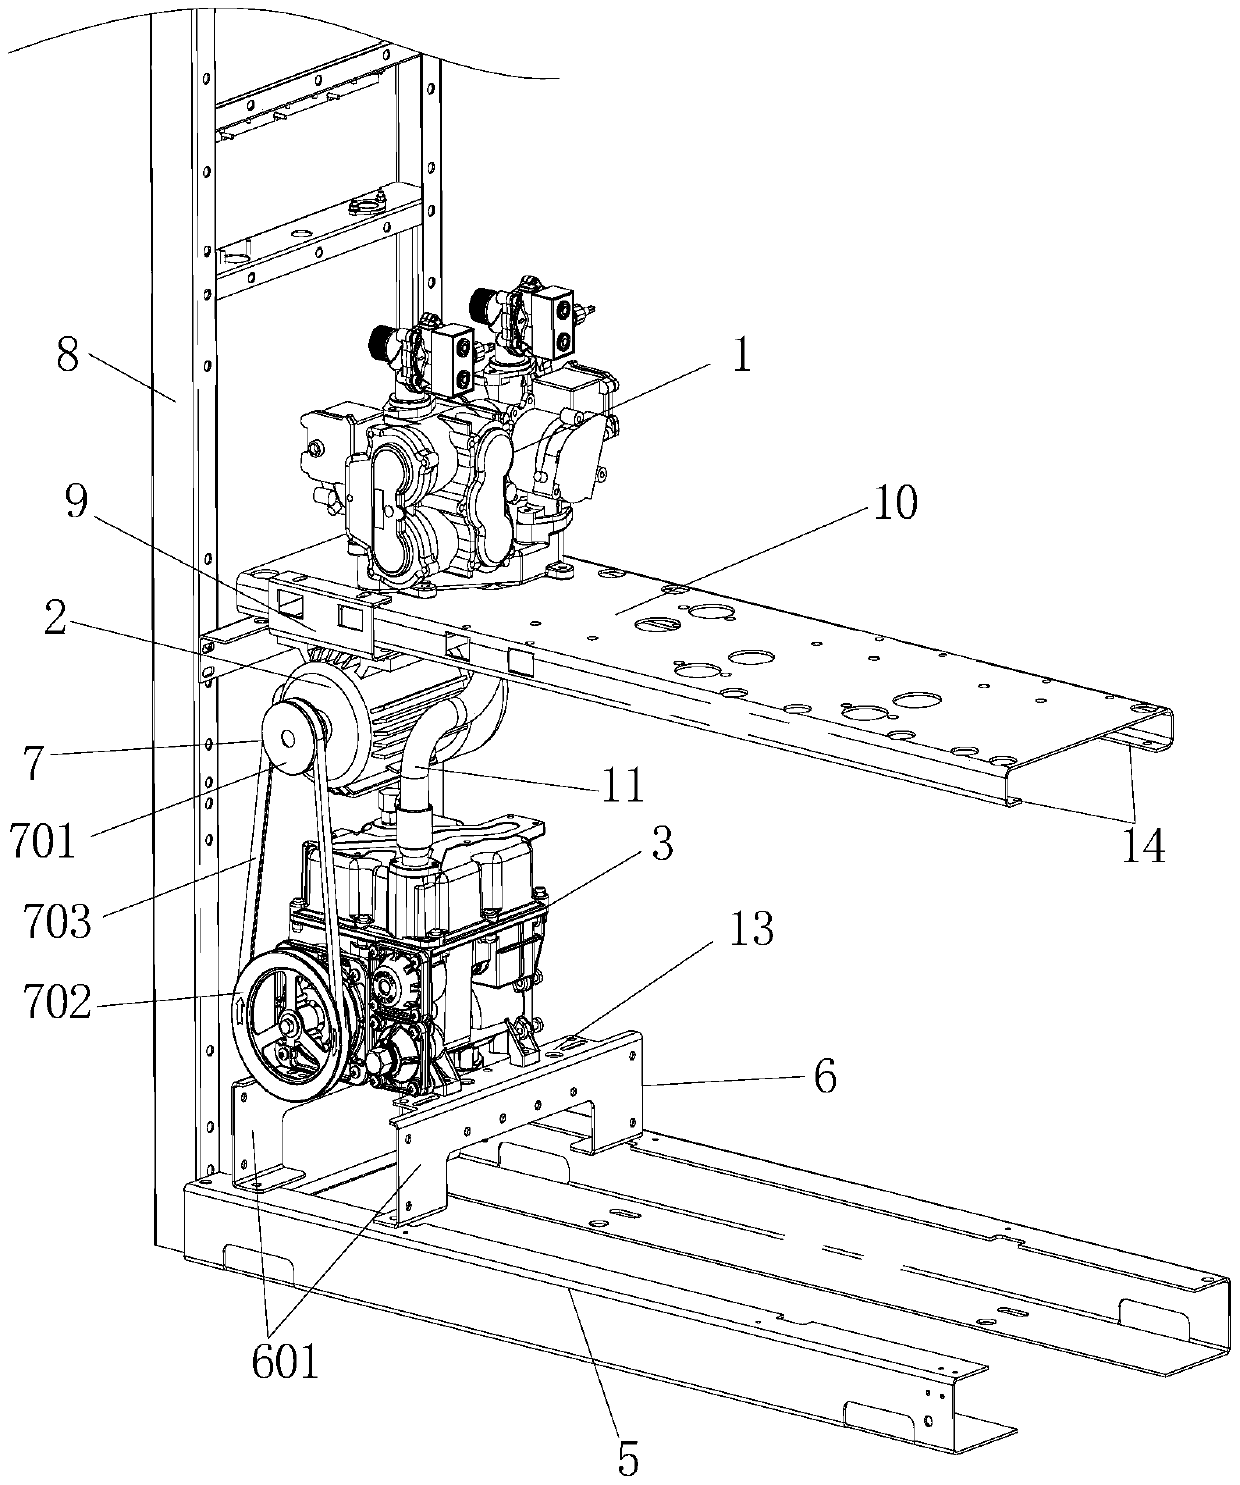 Hydraulic system of oiling machine